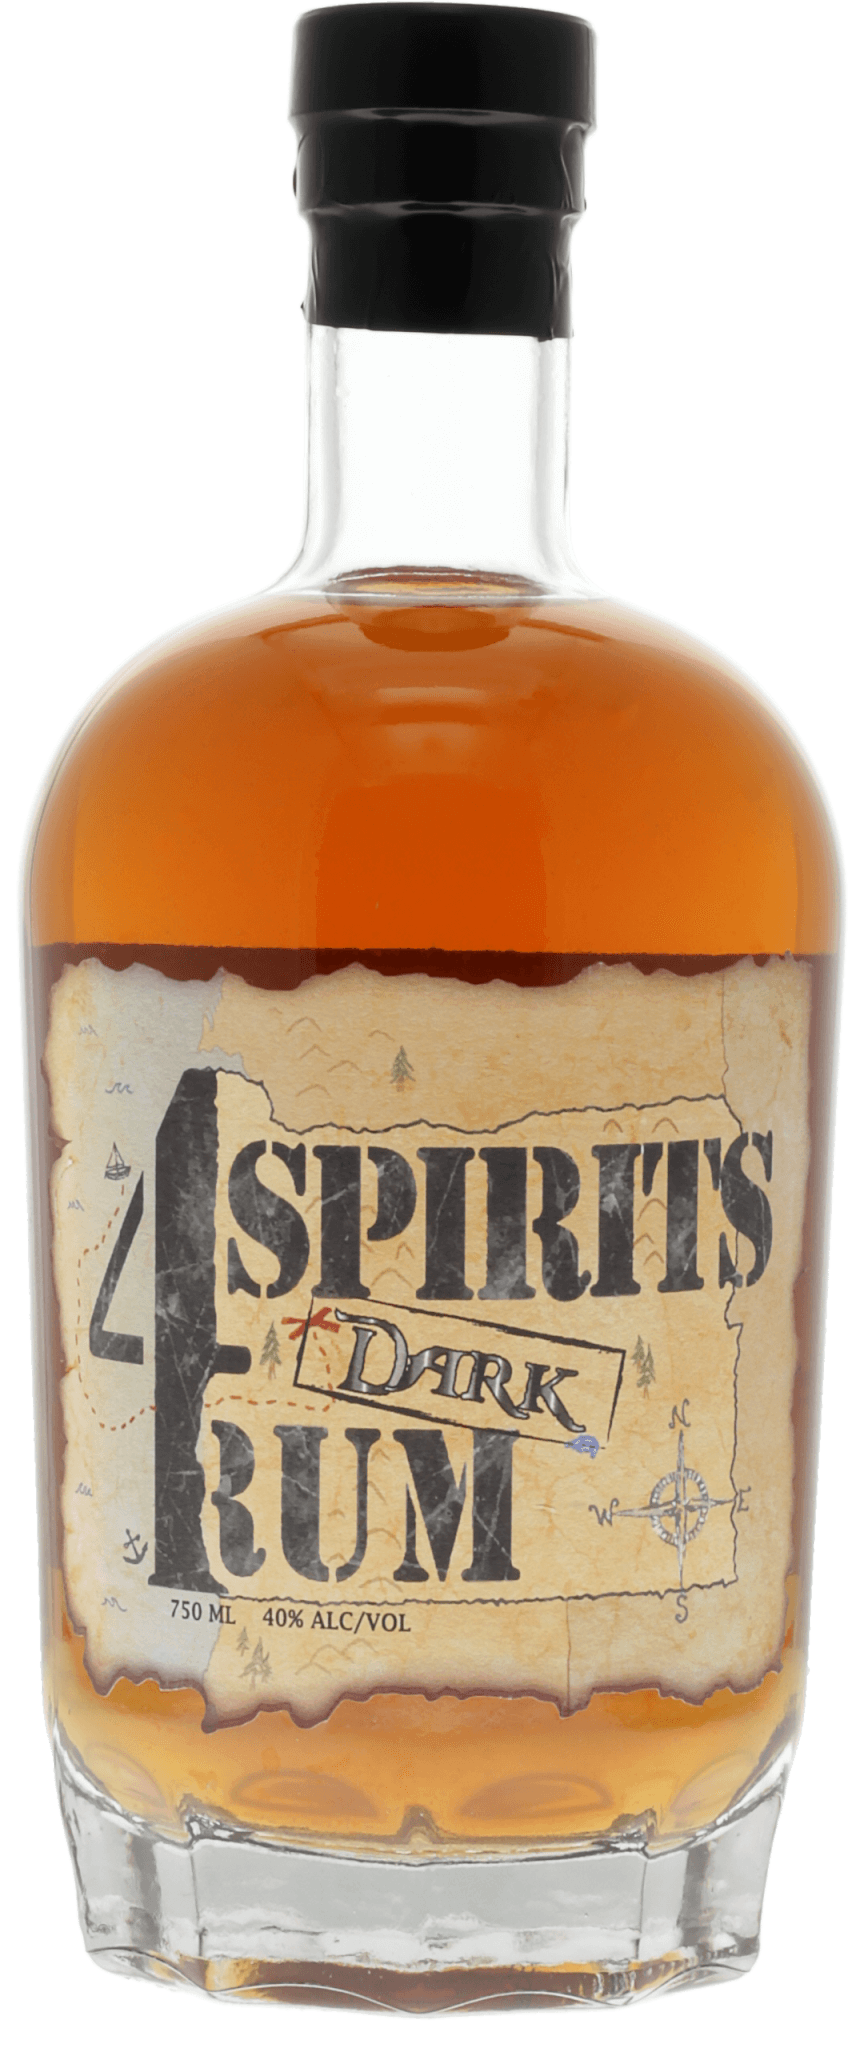 4 Spirits Dark Rum